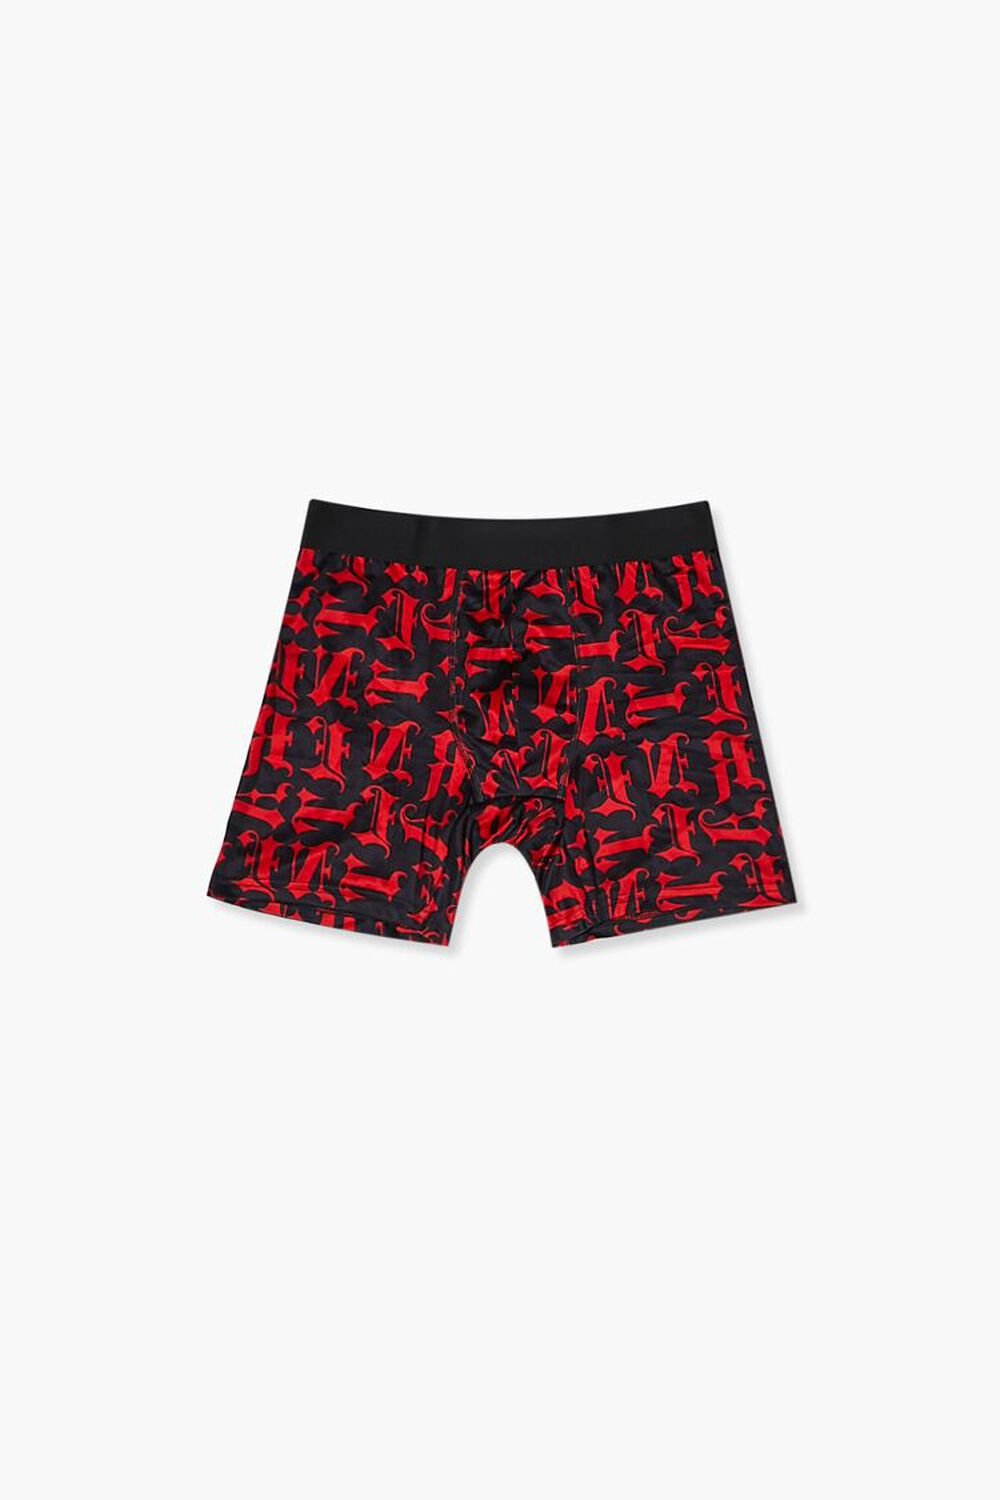 BLACK/RED Men Letter Print Boxer Shorts, image 1